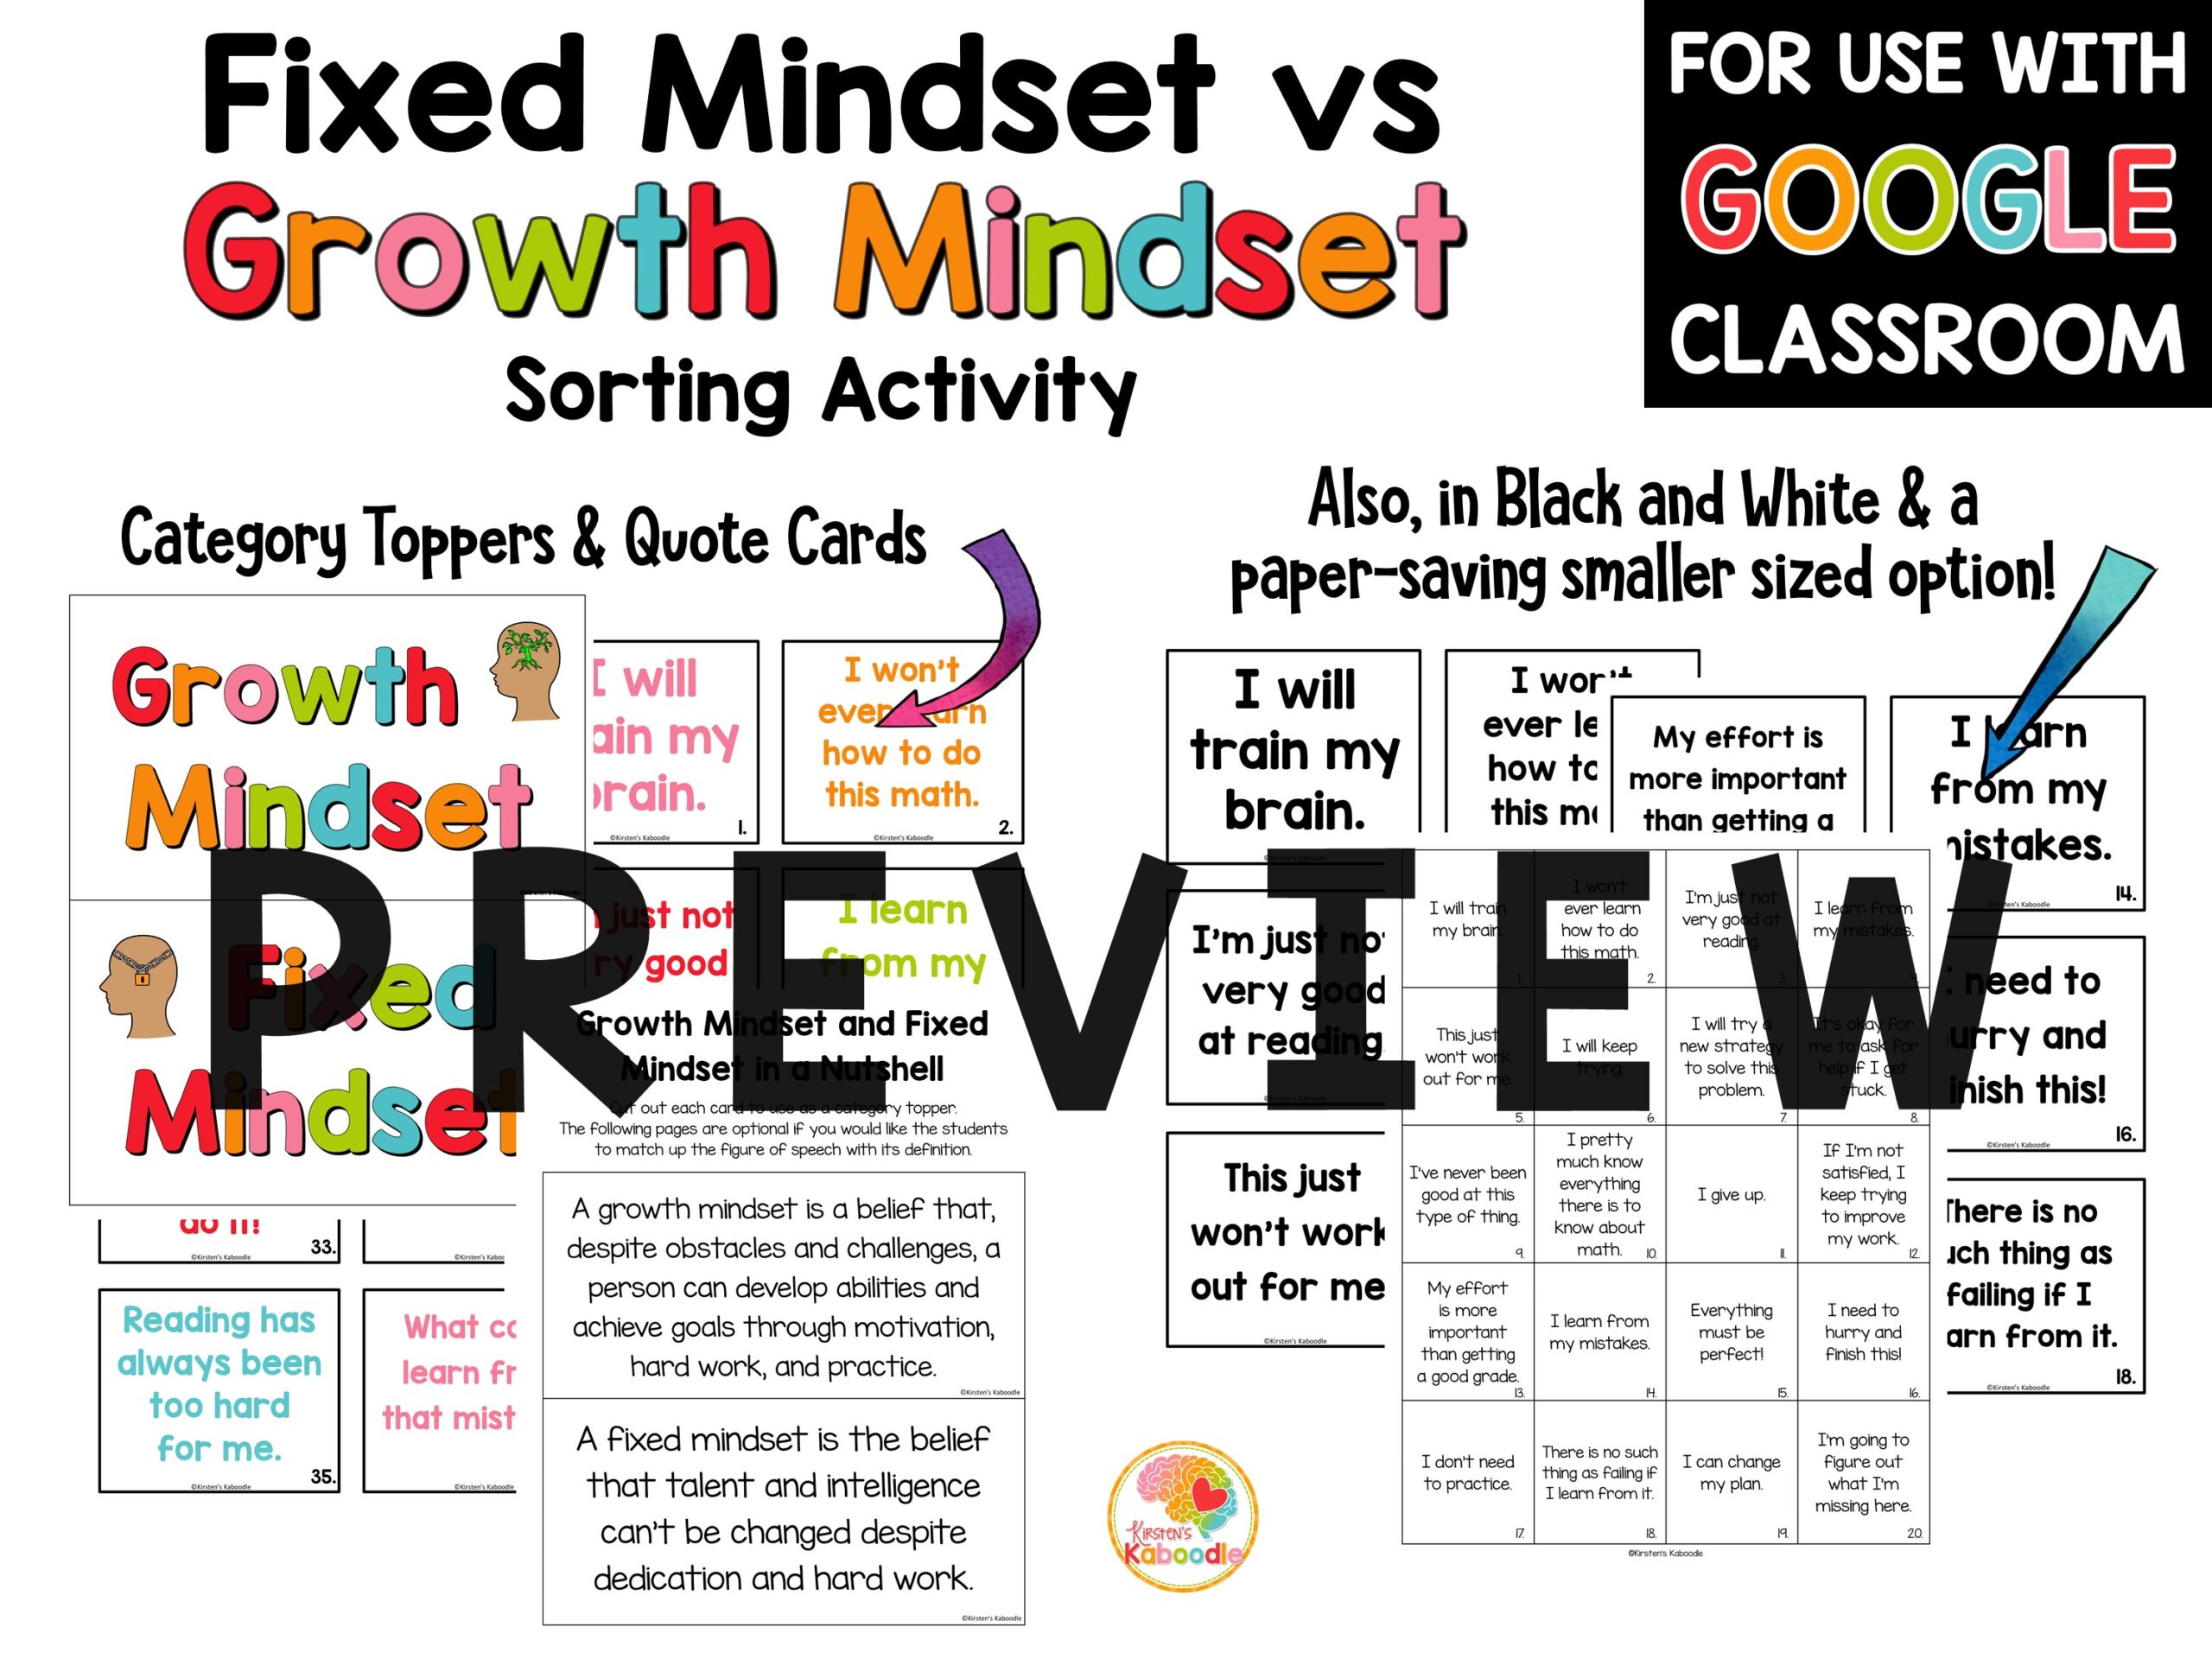 growth-mindset-vs-fixed-mindset